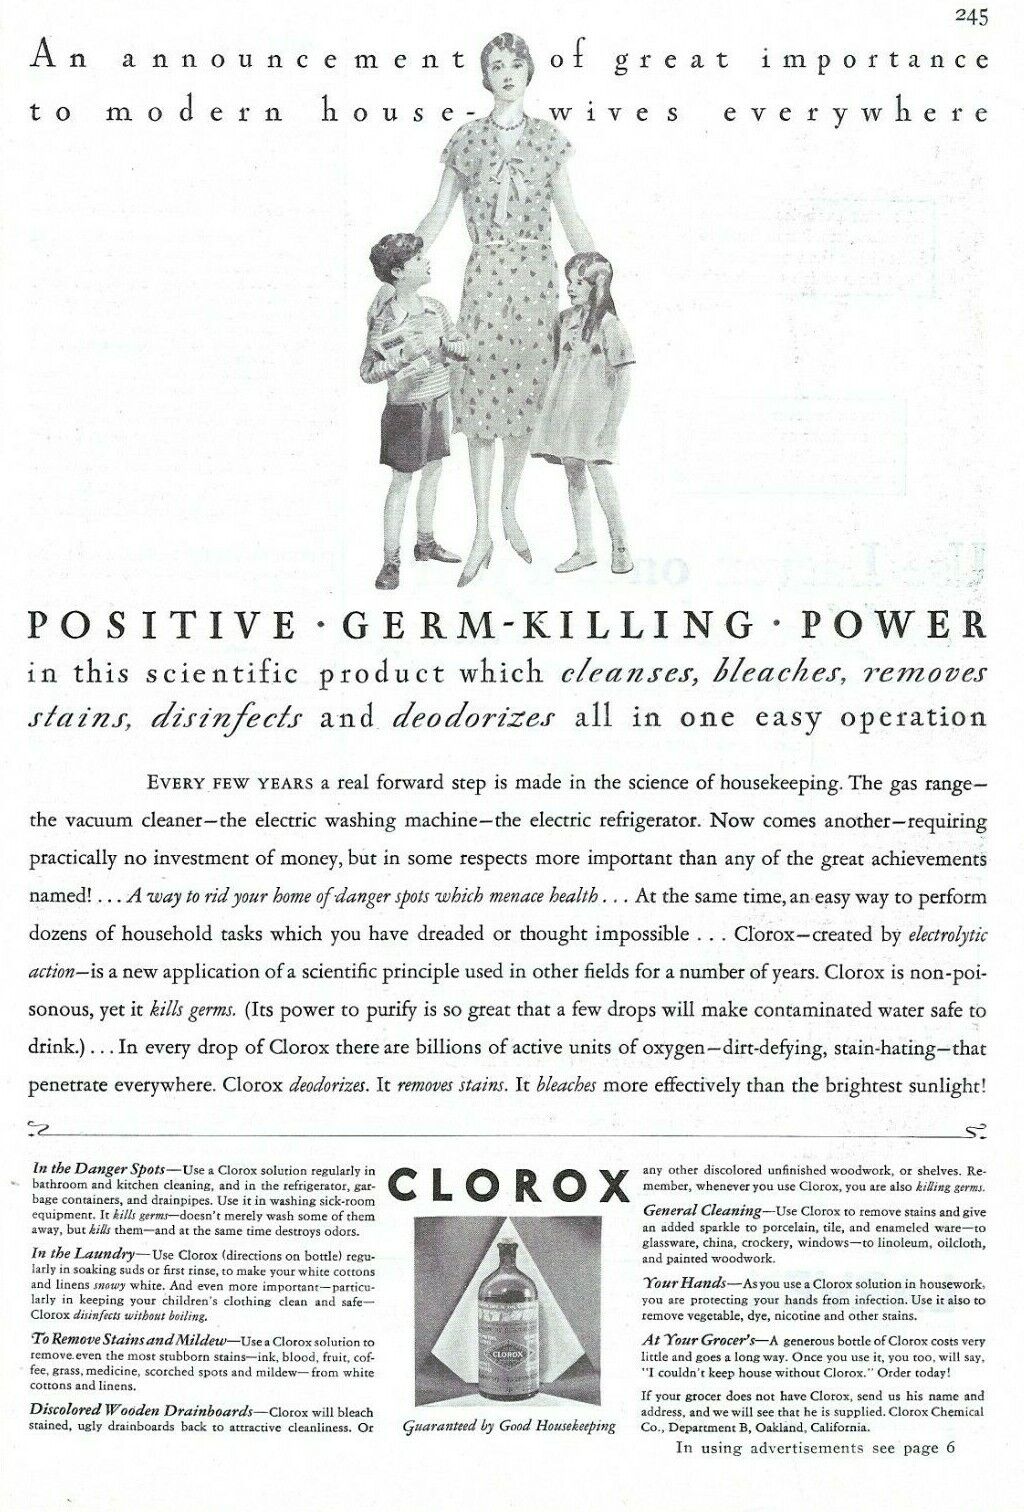 1930 CLOROX Vintage Print Advert      CLOROX has  POSITIVE GERM-KILLING POWER 